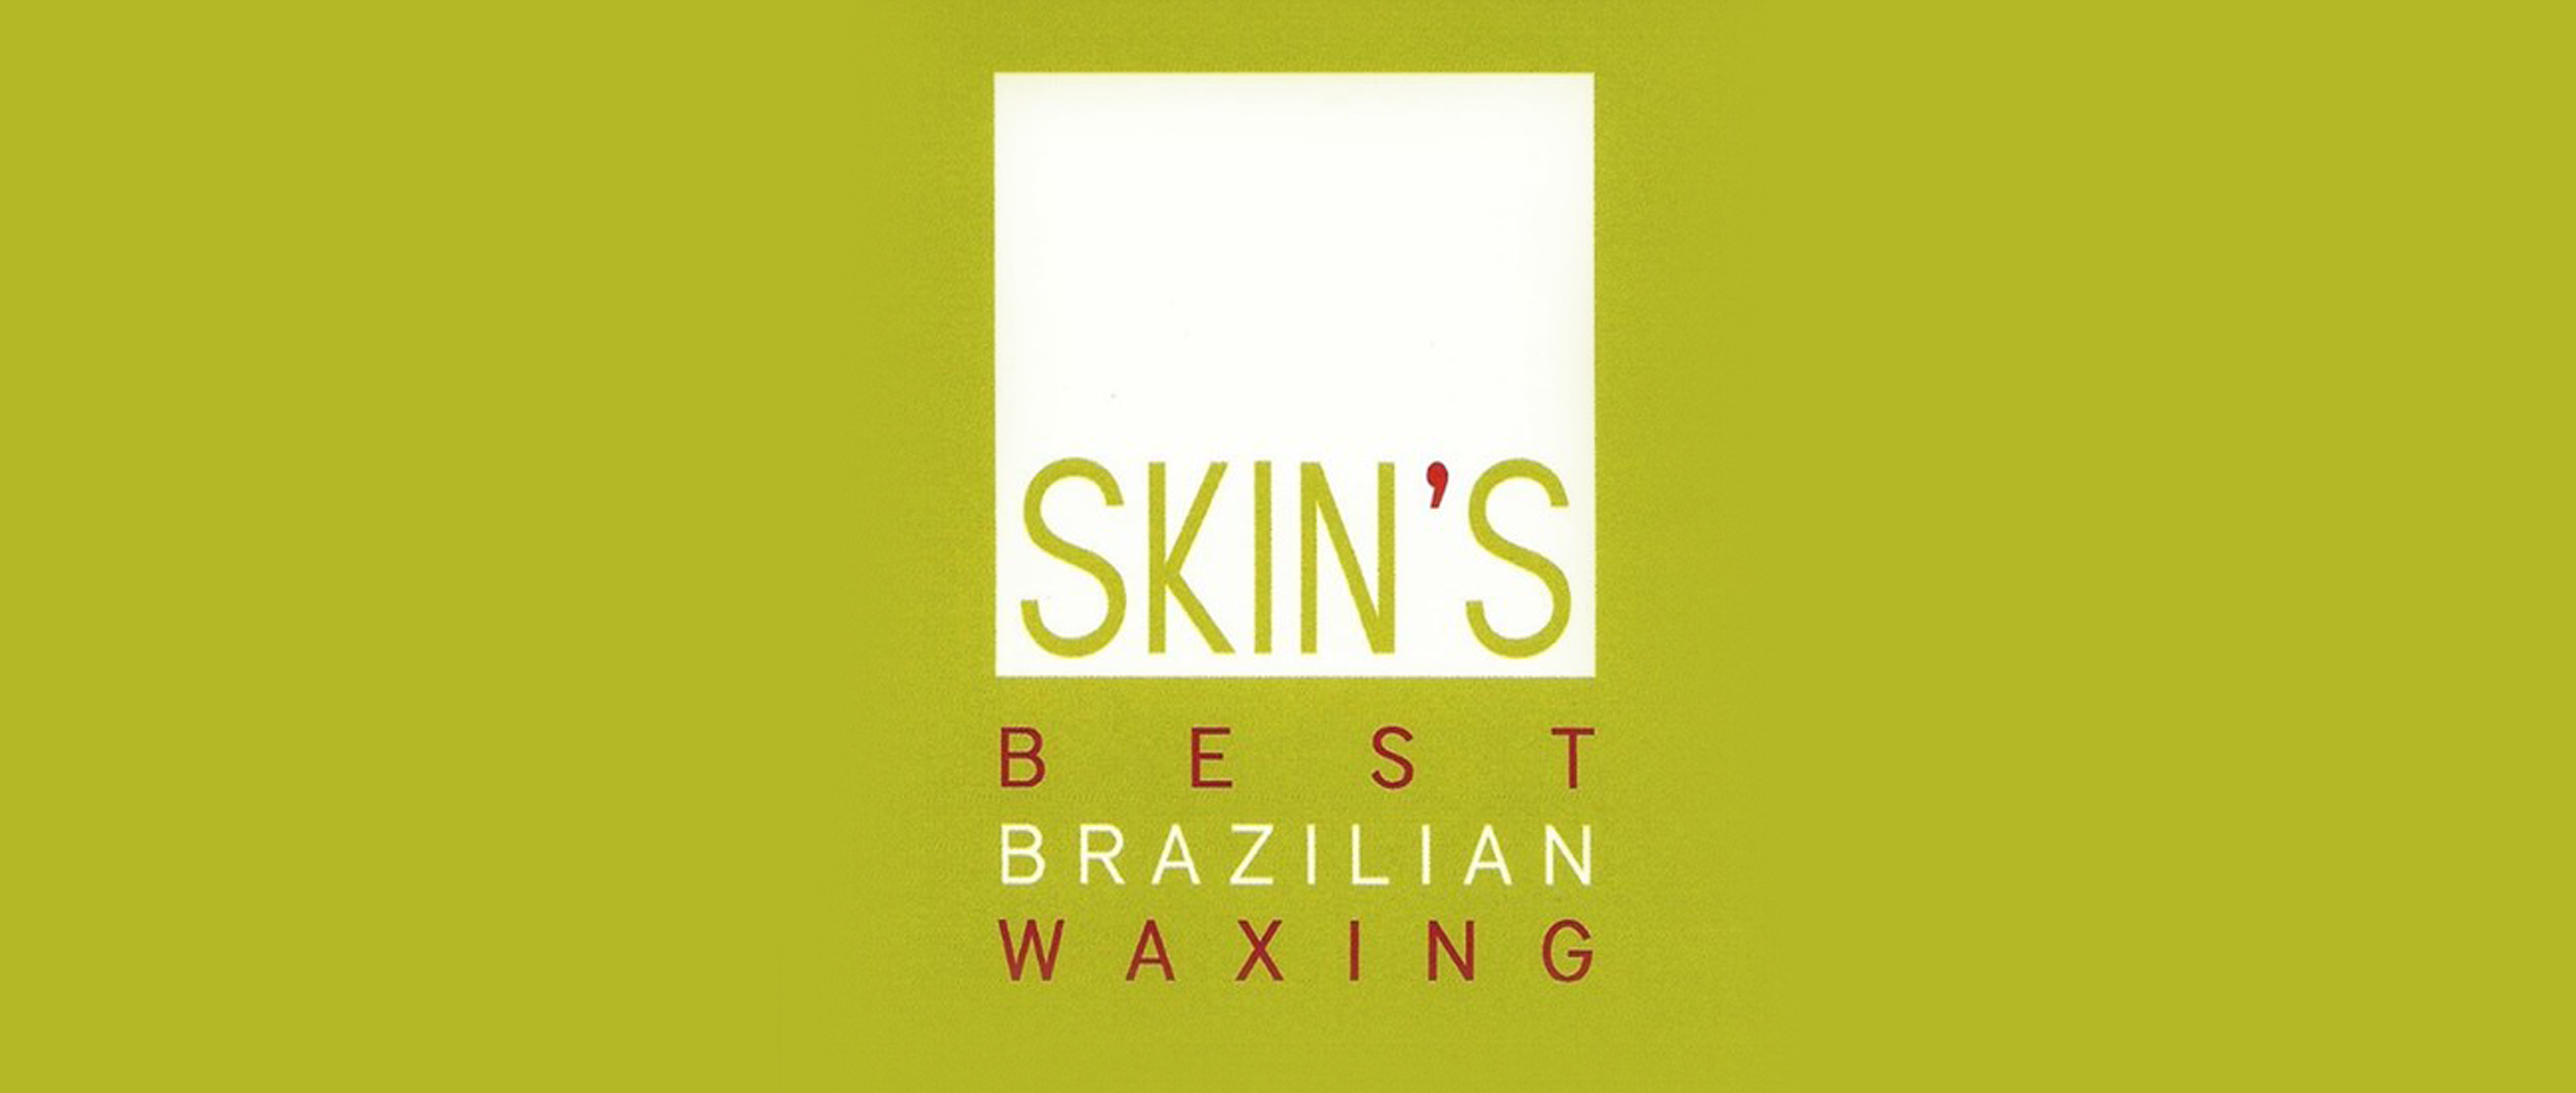 Skin's Brazilian